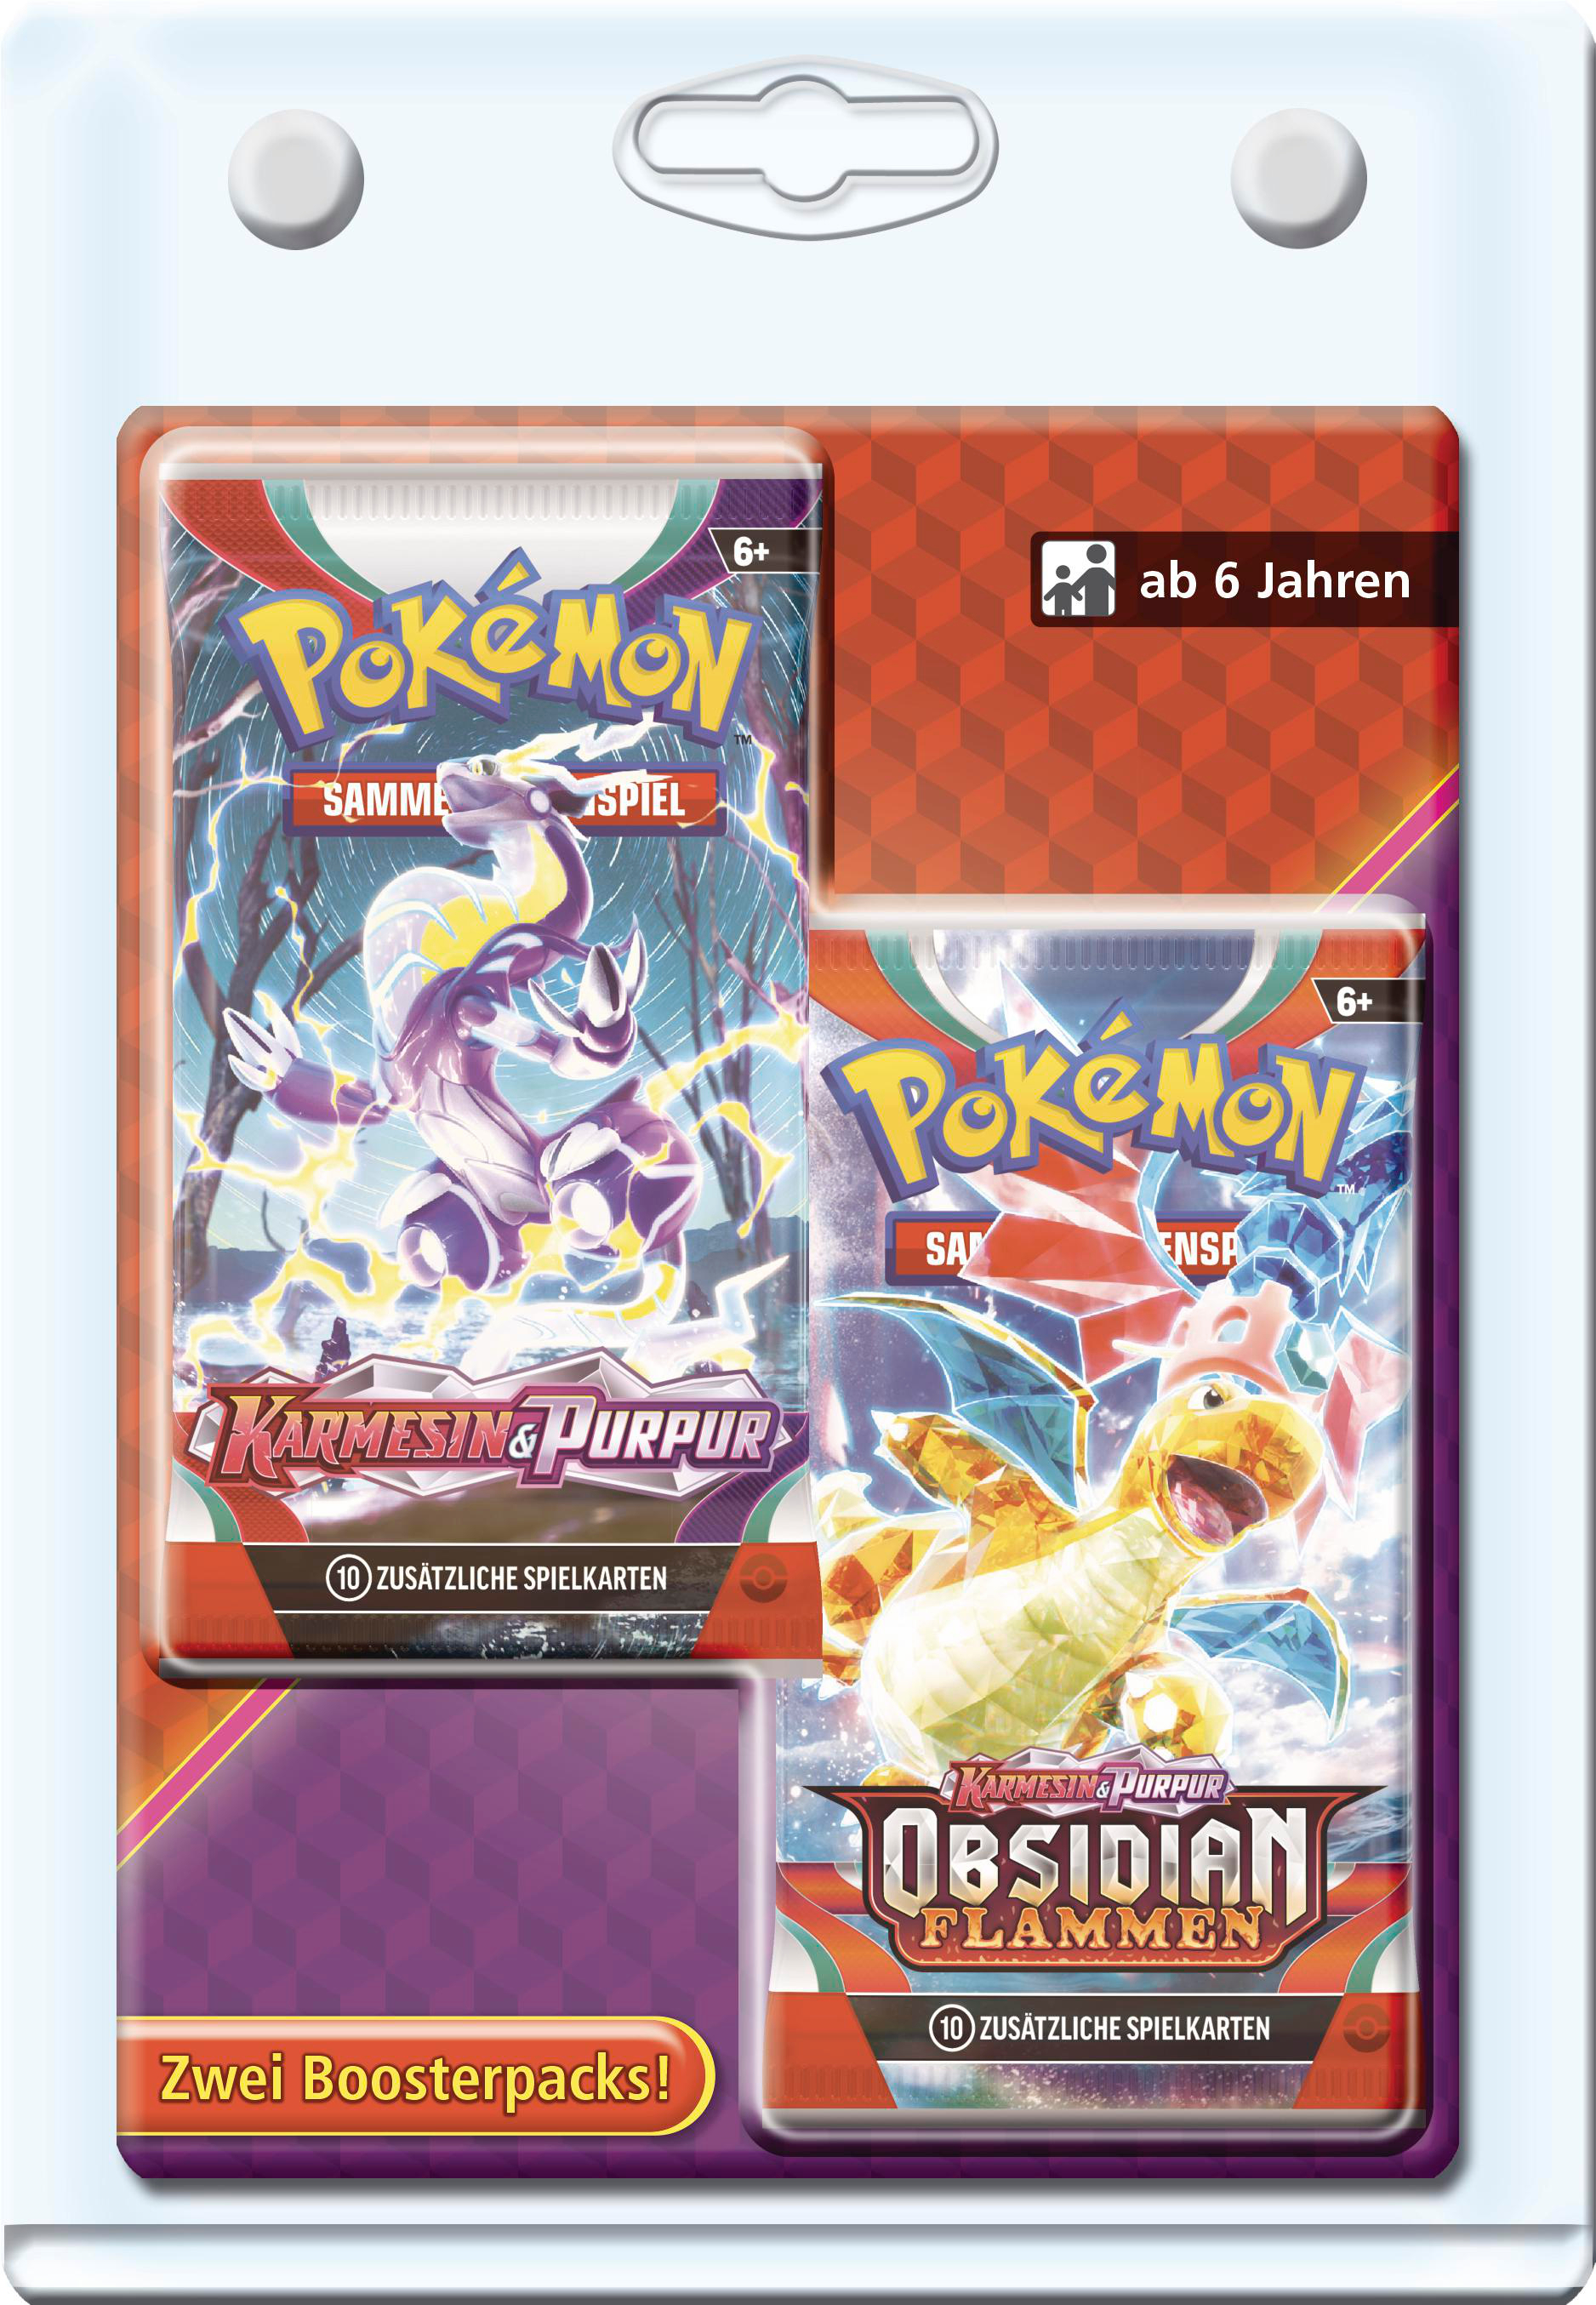 20312 Sammelkarten Pokémon: - POKEMON INT. THE COMPANY Top-Trainer-Box